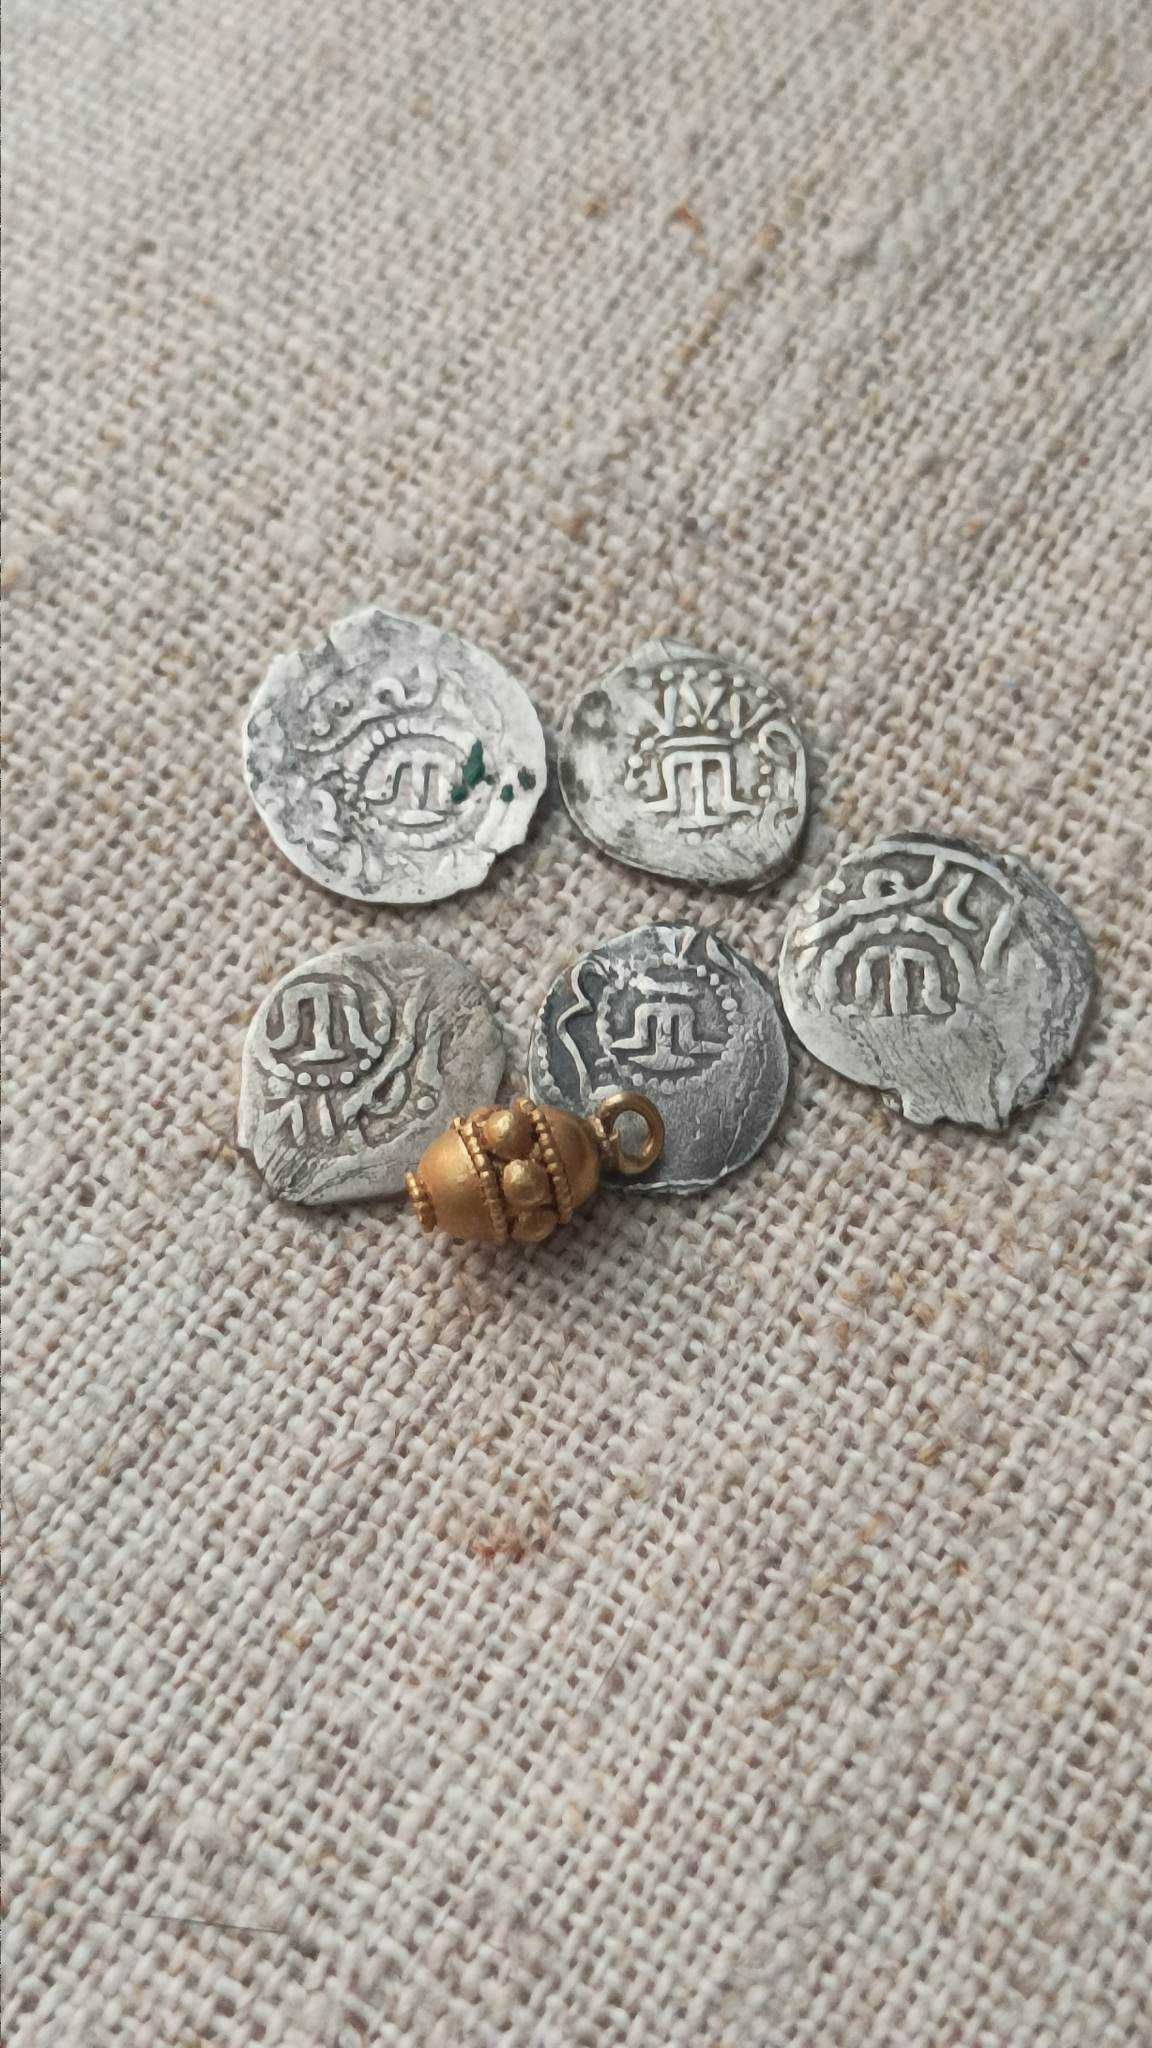 антична золота підвіска та монети акче